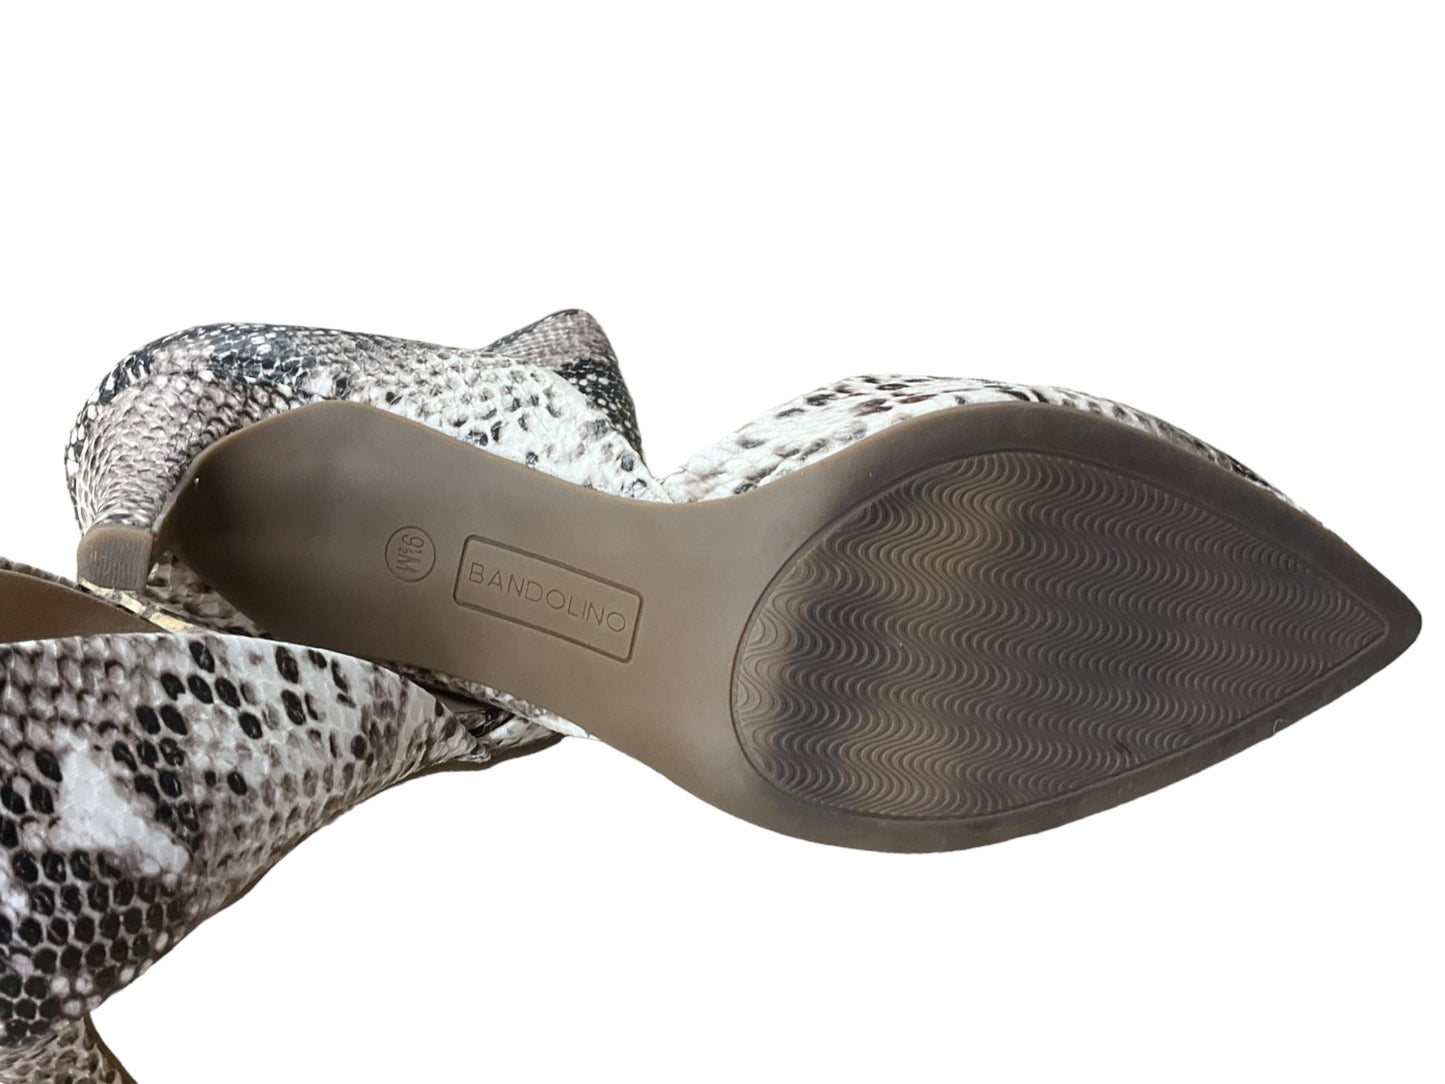 Snakeskin Print Shoes Heels Stiletto Bandolino, Size 9.5